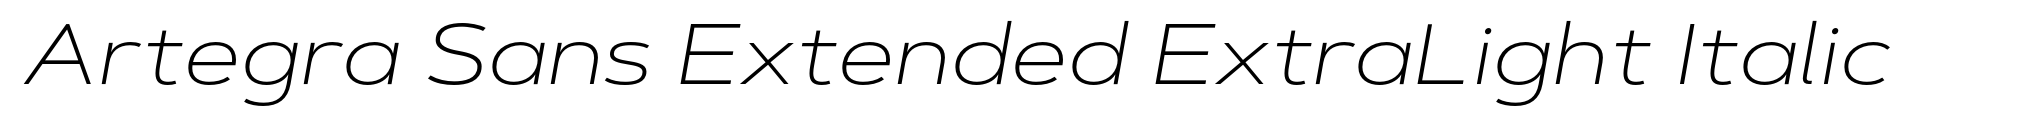 Artegra Sans Extended ExtraLight Italic image